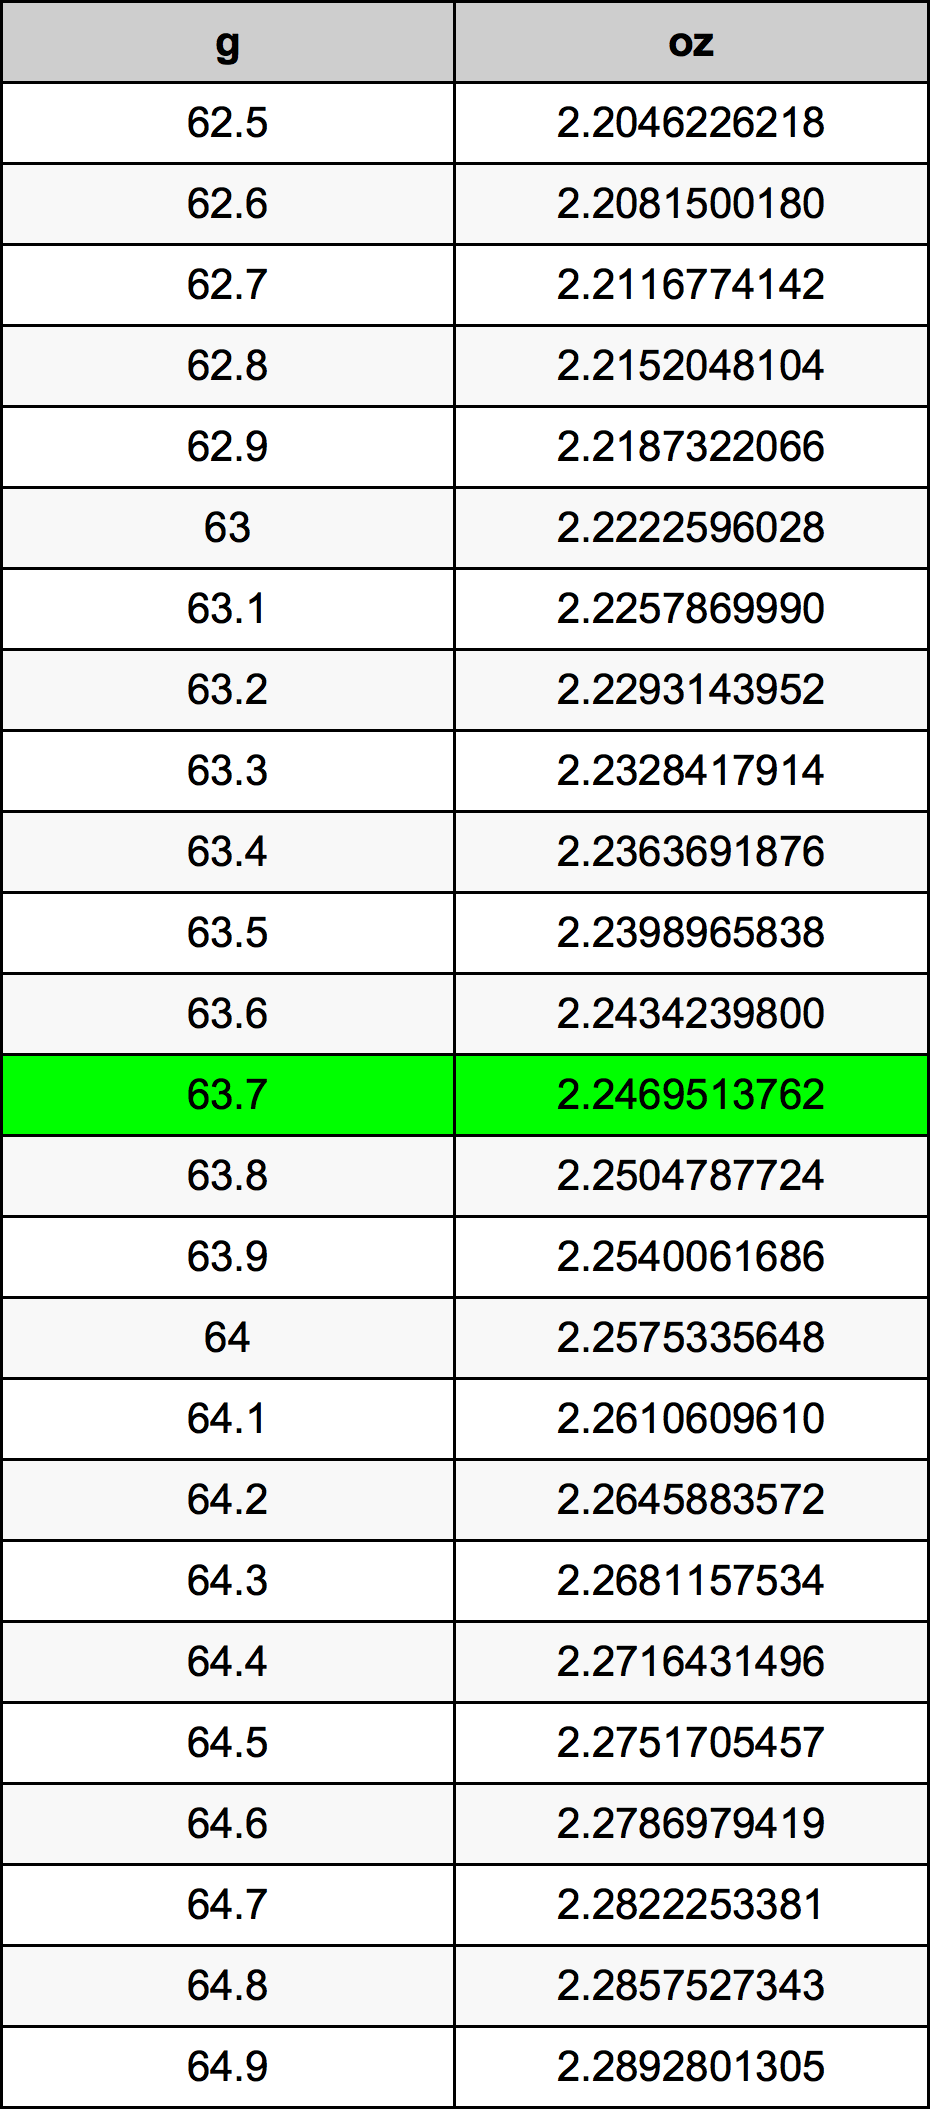 63.7 غرام جدول تحويل